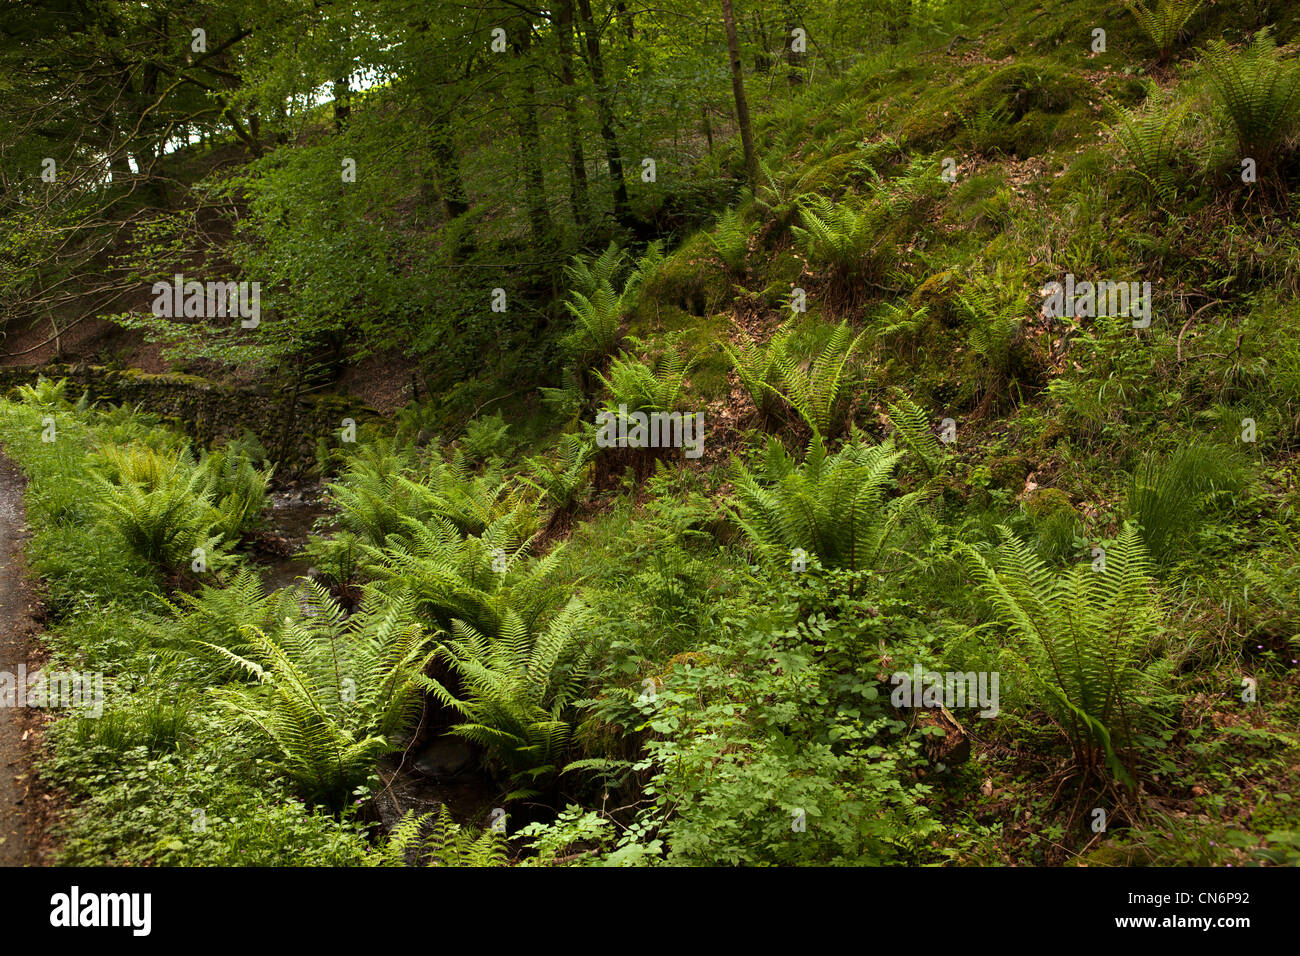 UK, Cumbria, Lake District, Tarn Hows, fern filled woodland glade Stock Photo